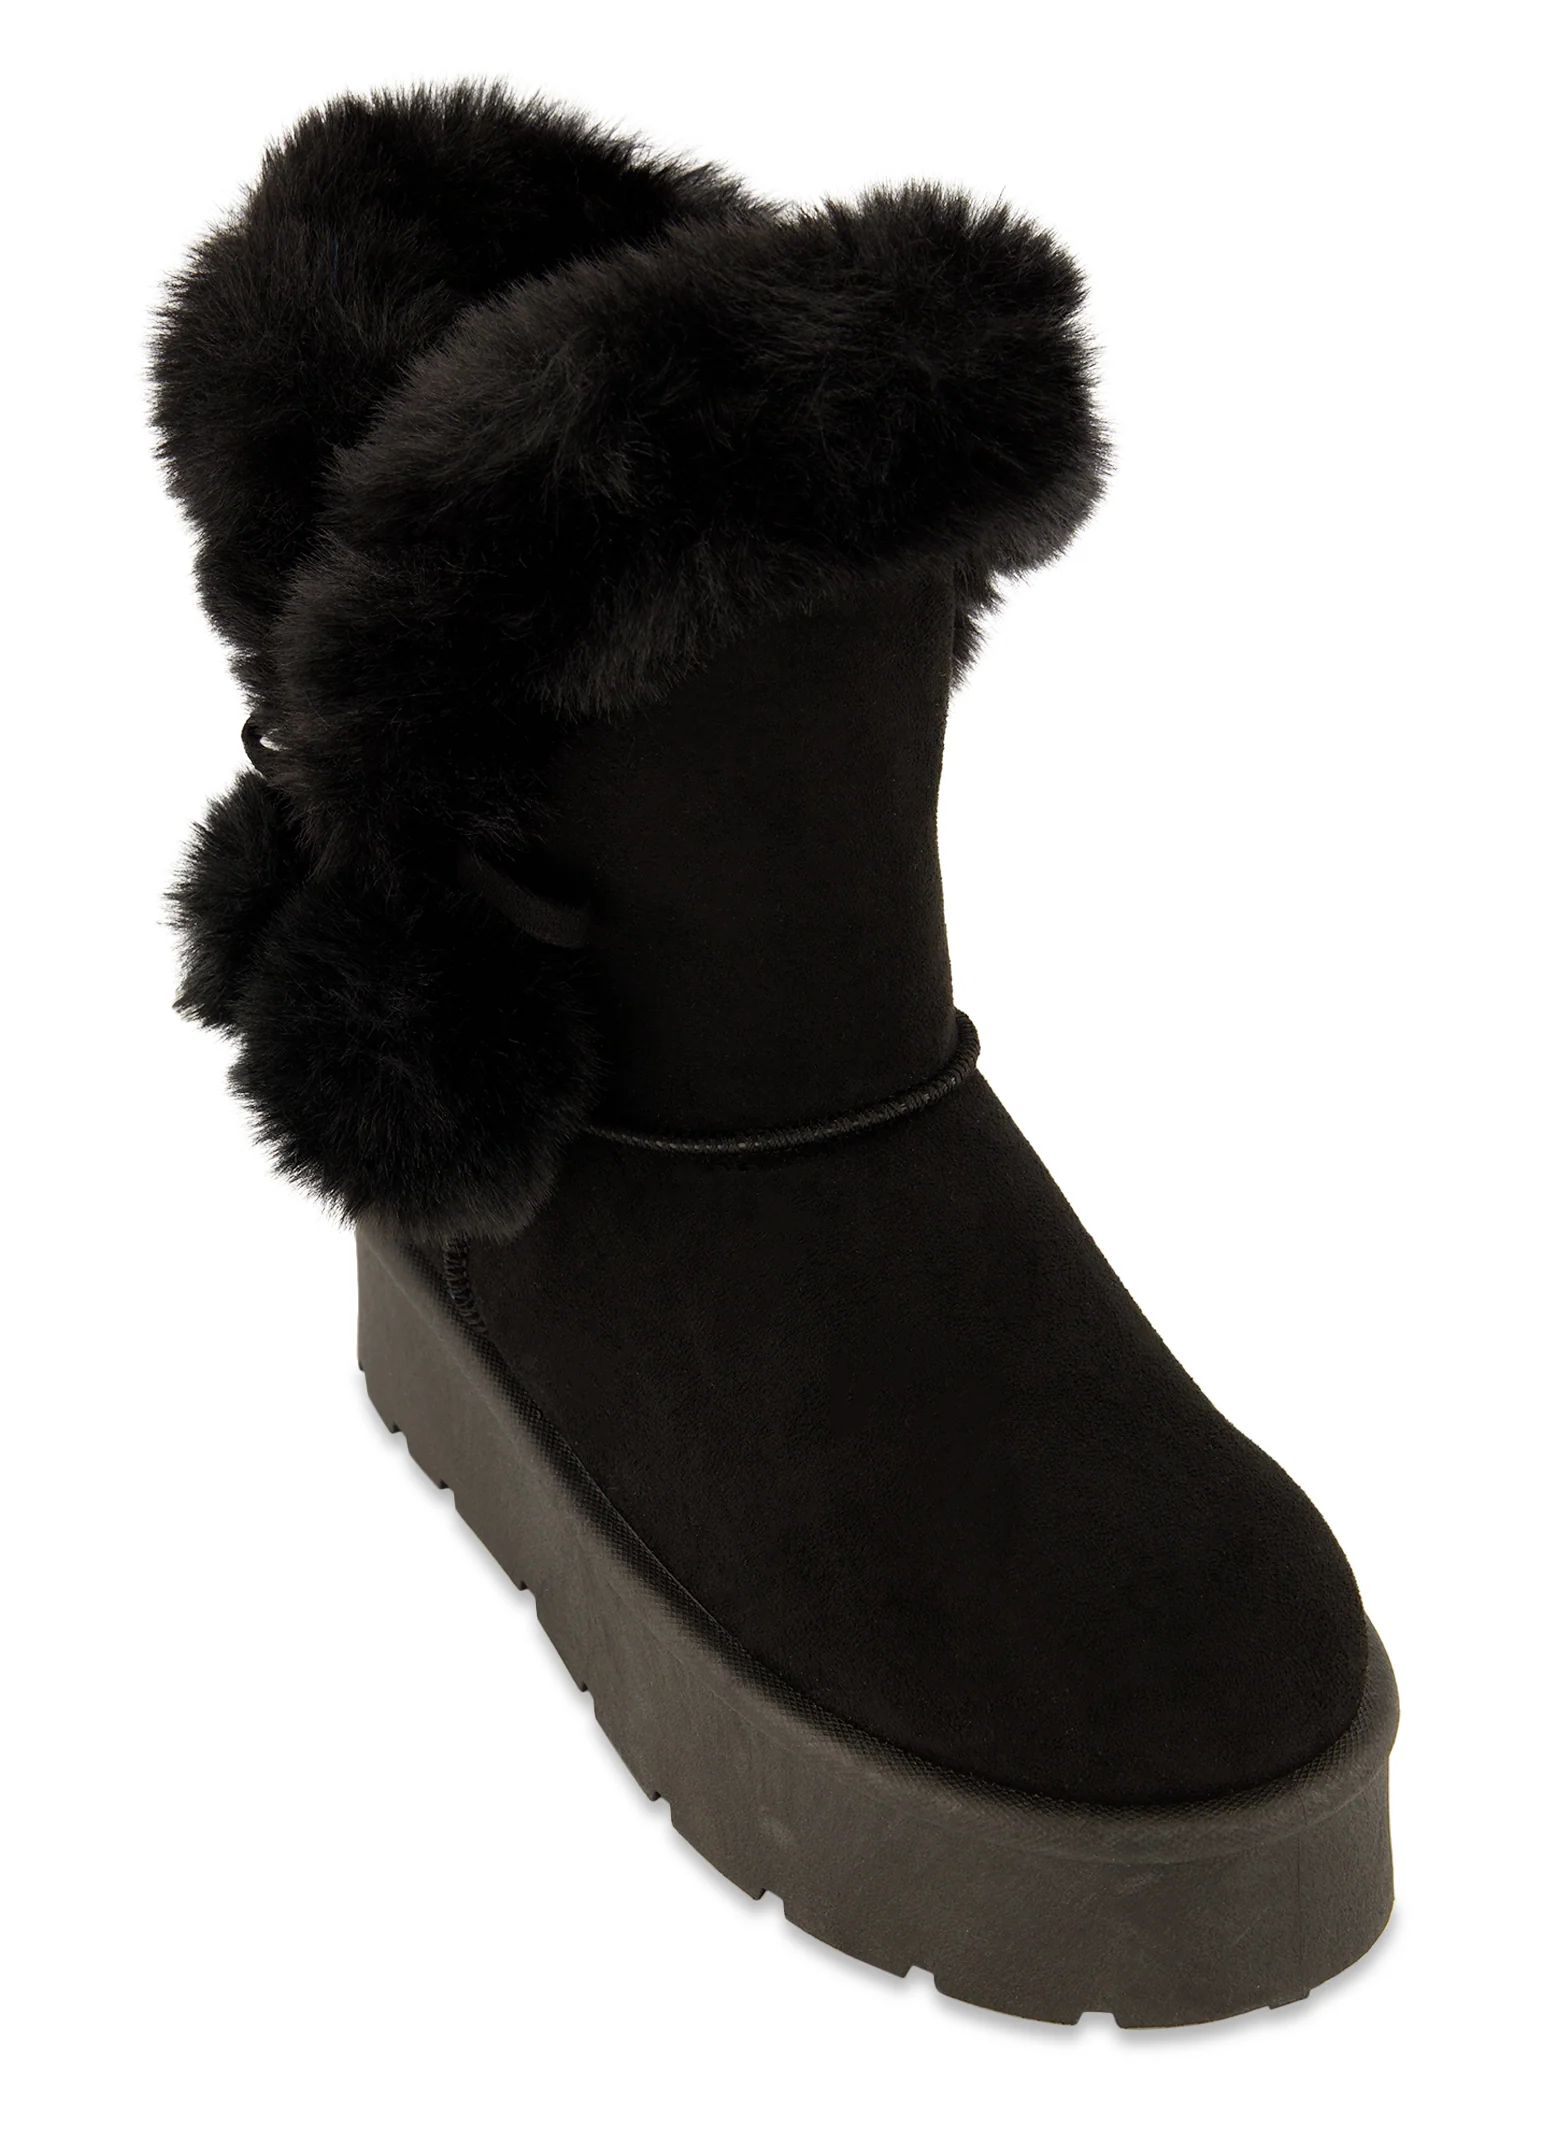 Faux Fur Lined Pom Pom Boots  - Black Suede | Rainbow Shops